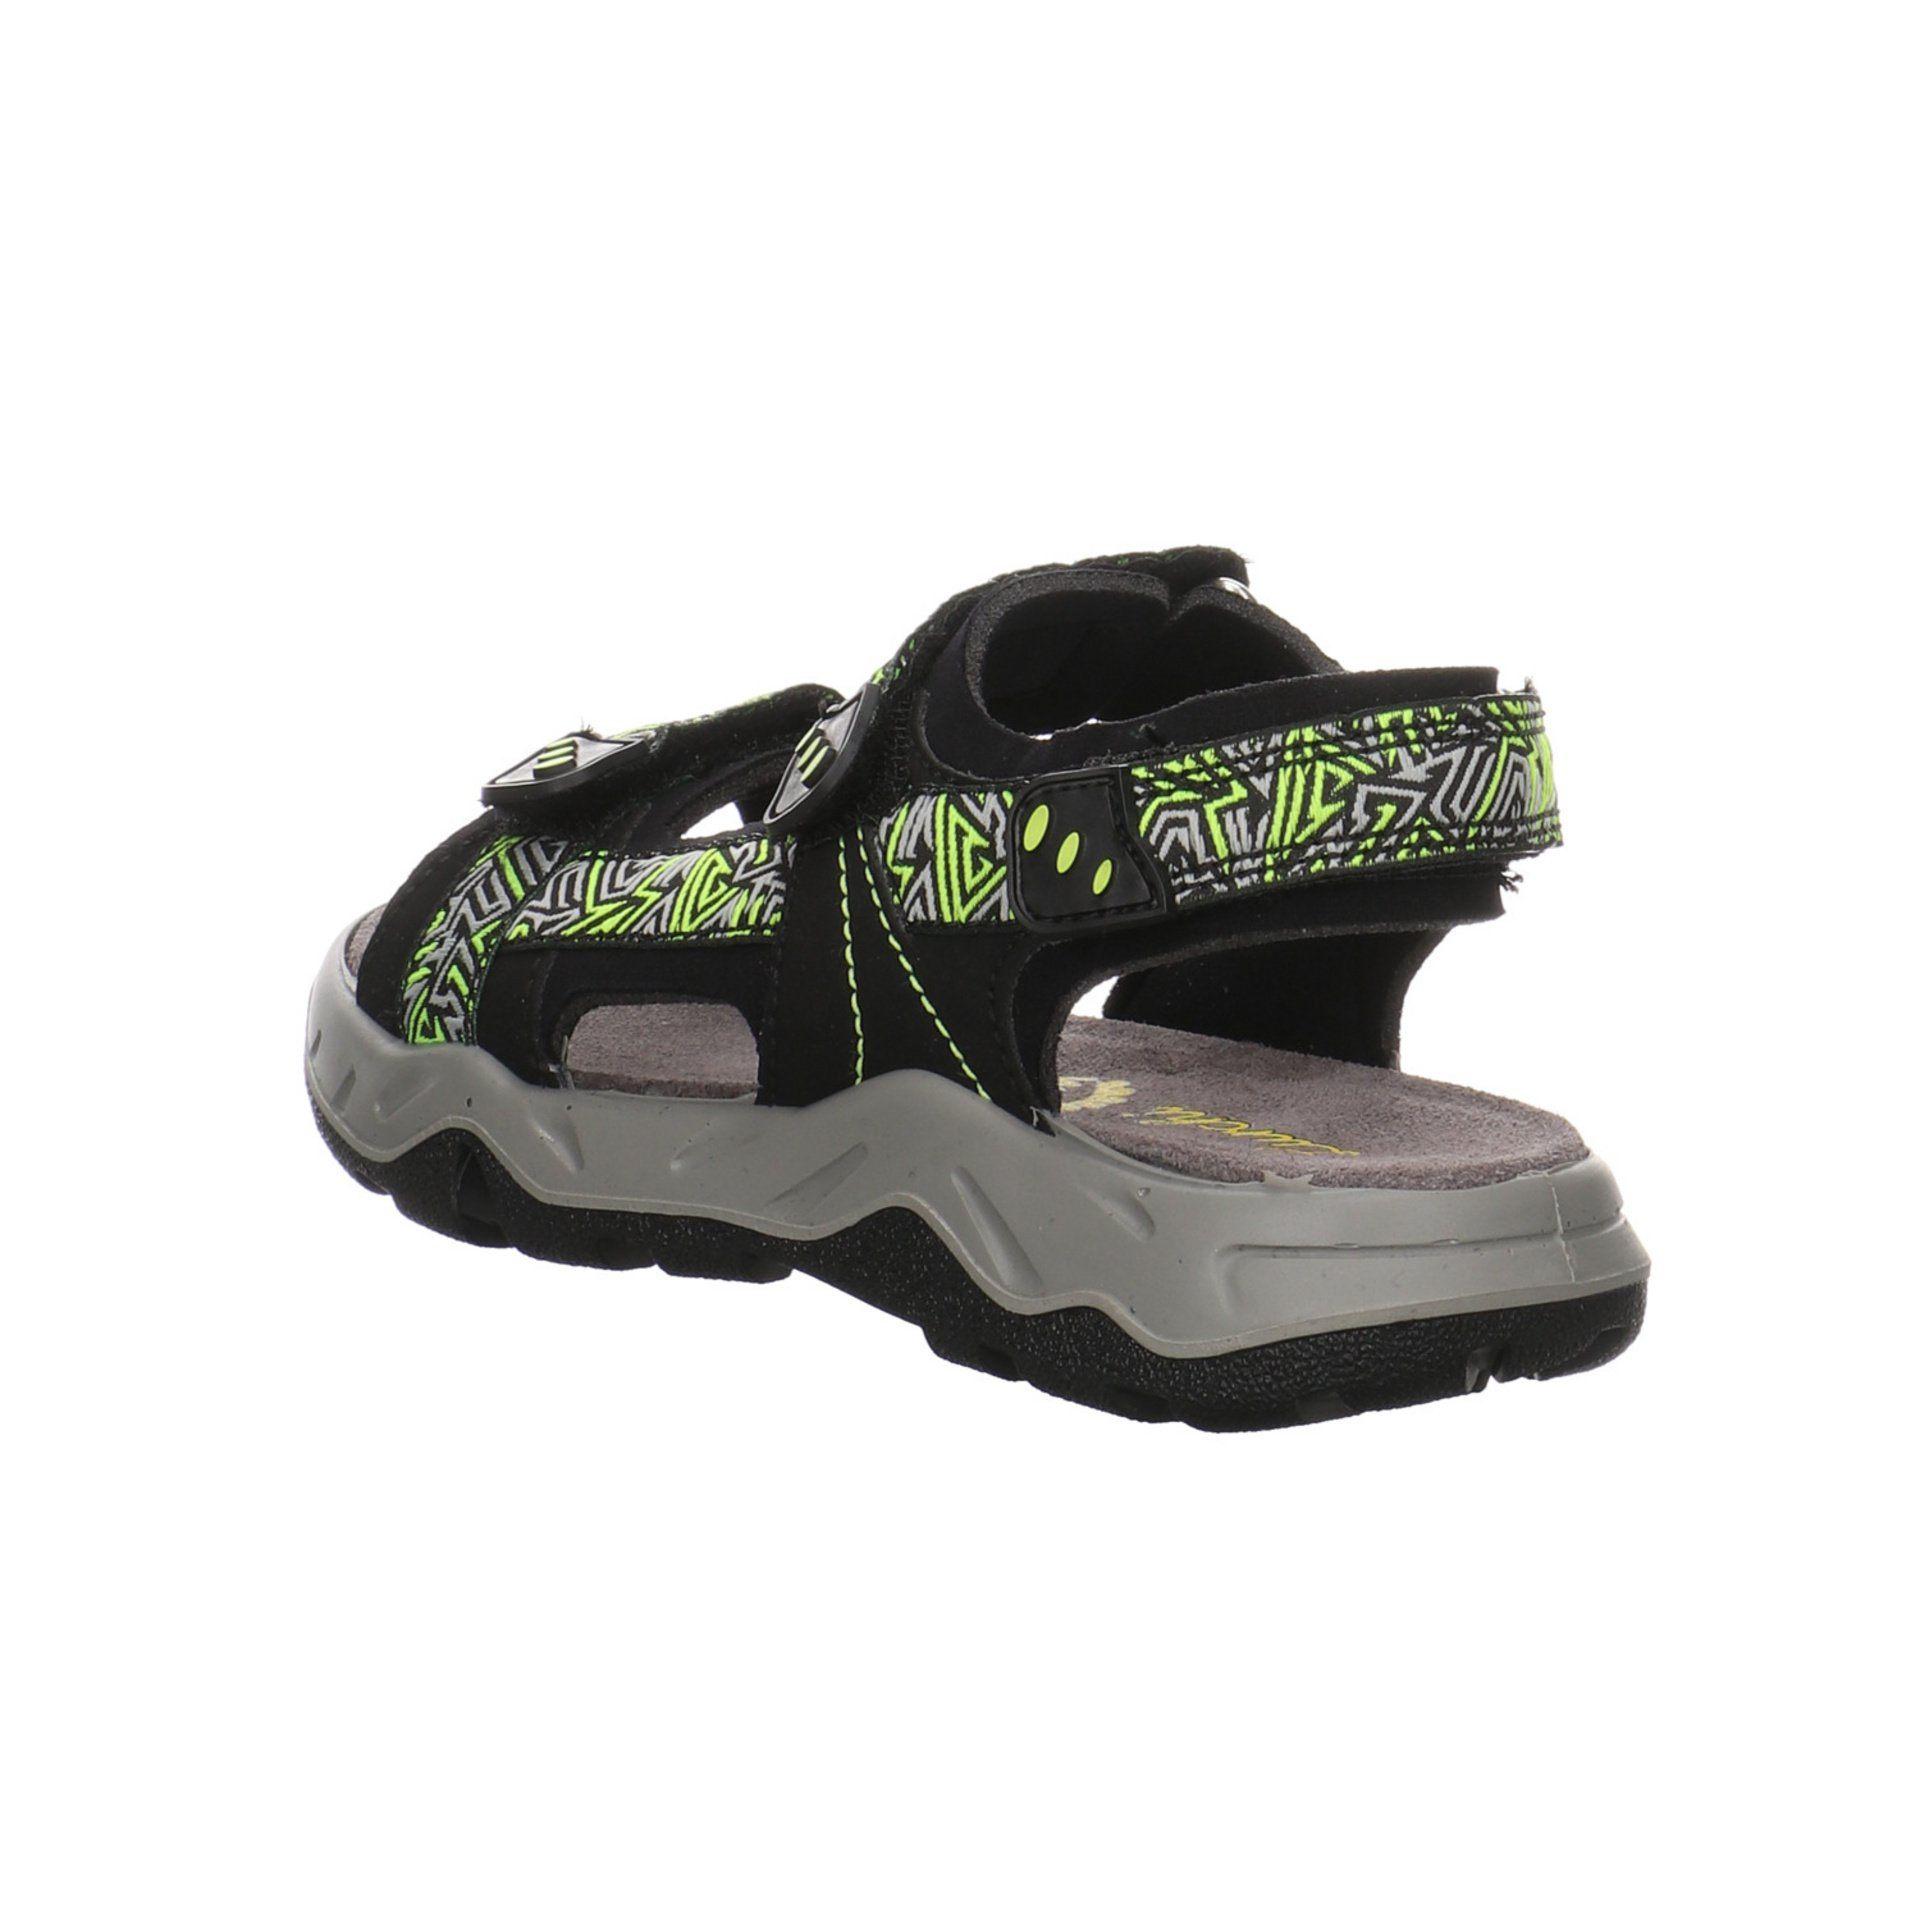 Salamander Lurchi Jungen Multi Odono Sandalen Kinderschuhe Sandale Schuhe Sandale Synthetikkombination Black